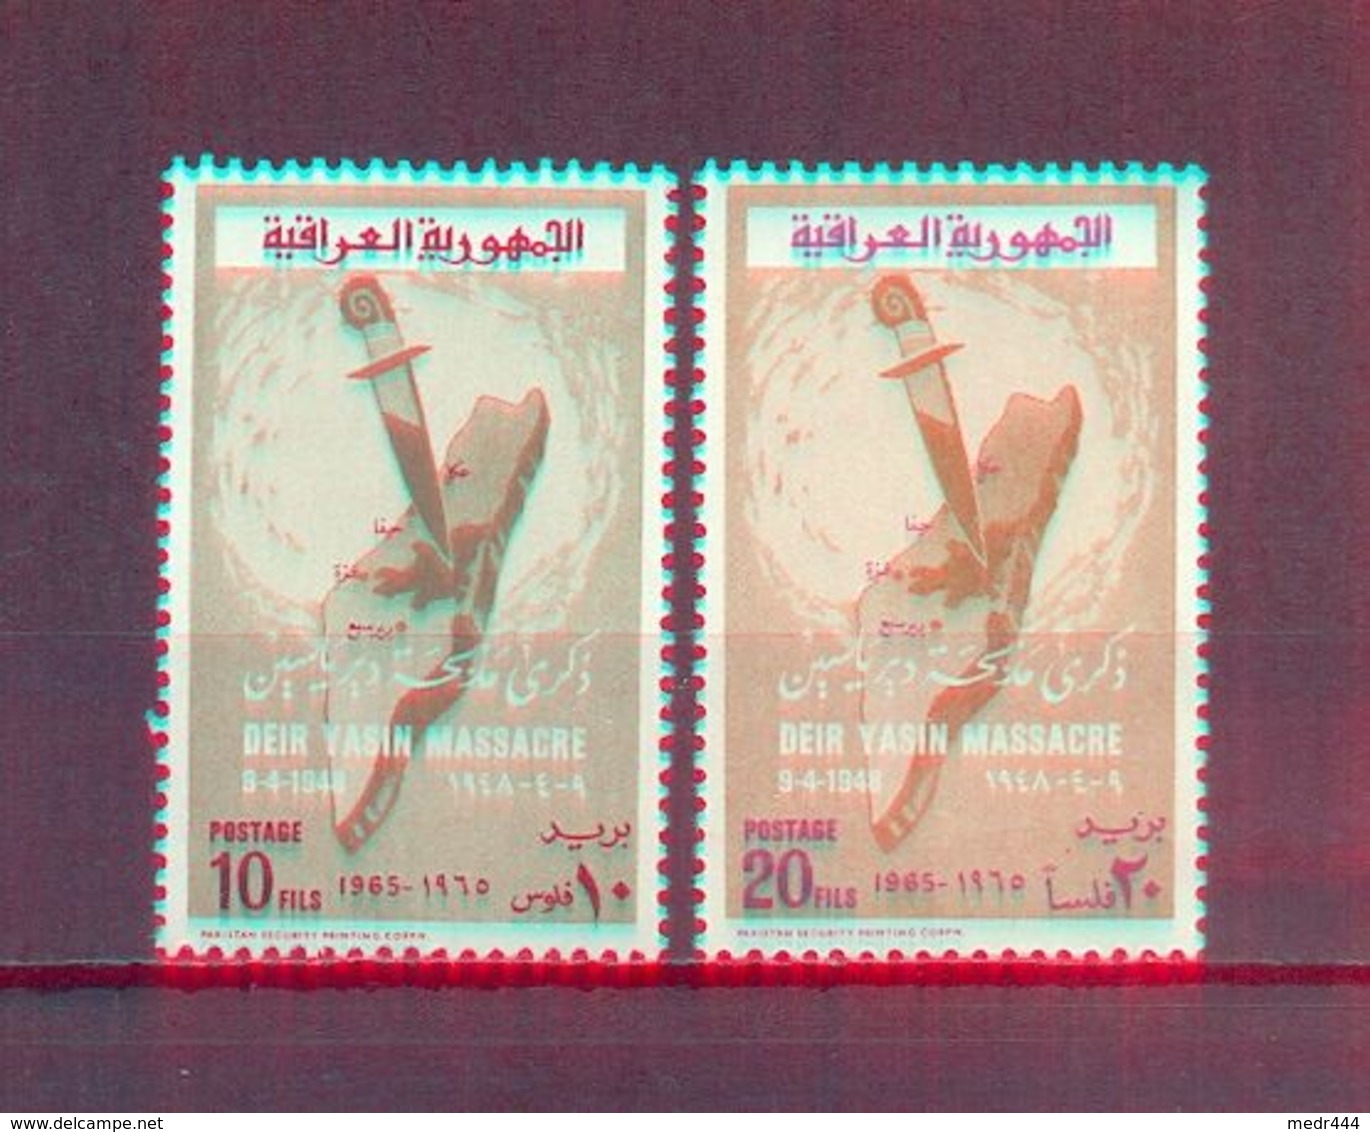 Irak/Iraq 1965 - Dei Yassin Massacre- Stamps 2v - Complete Set - MNH** Excellent Quality - Irak